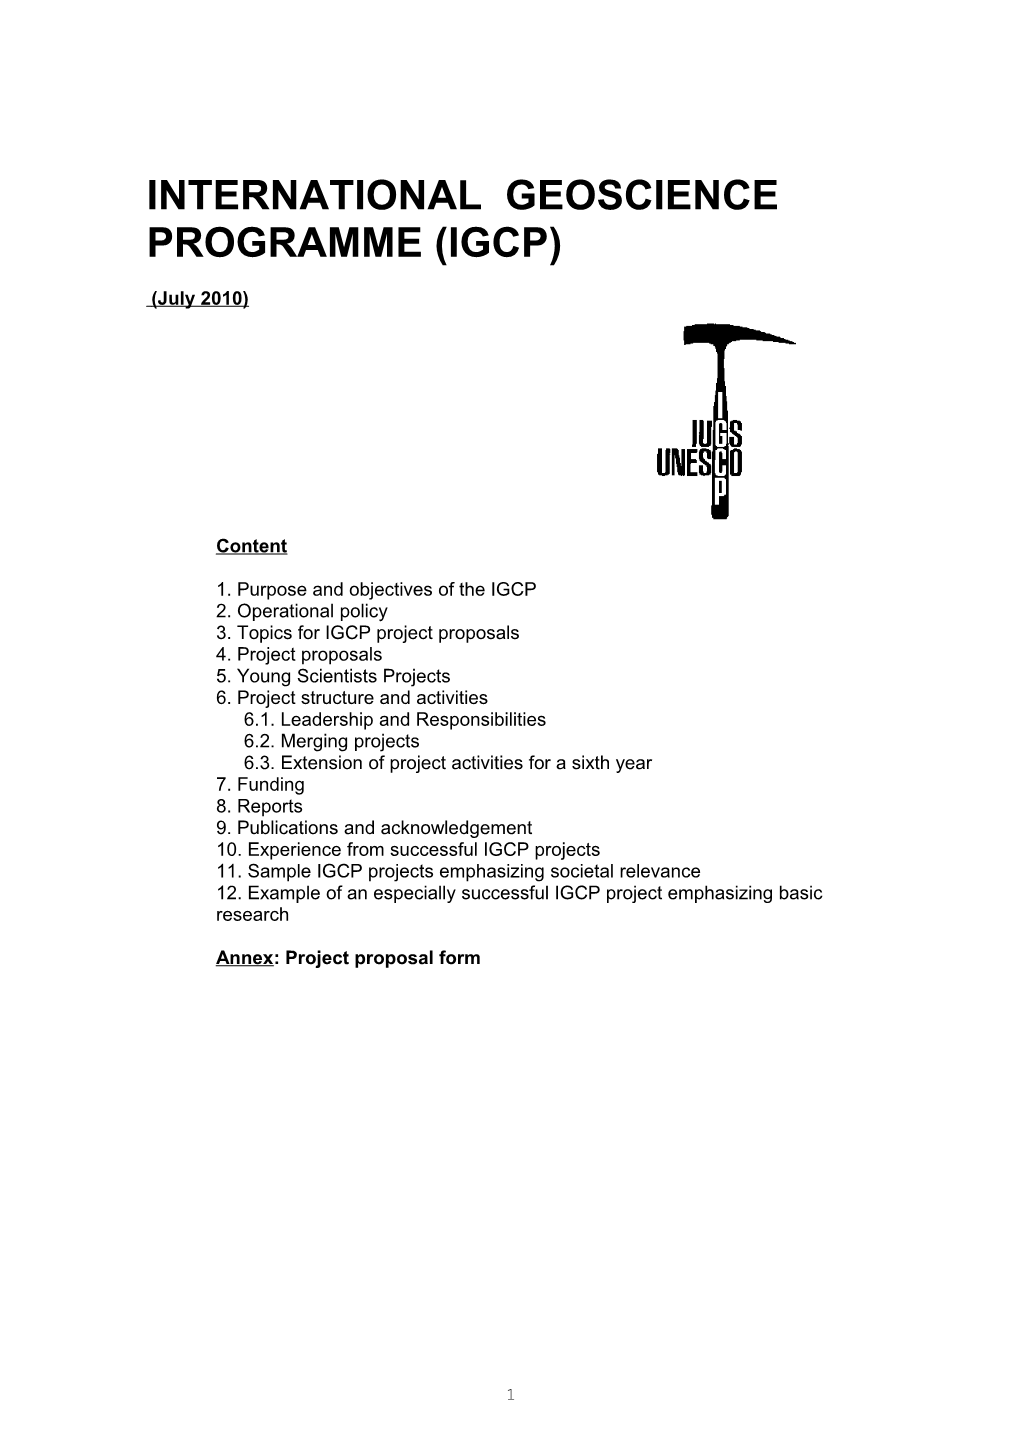 International Geoscience Programme (Igcp)